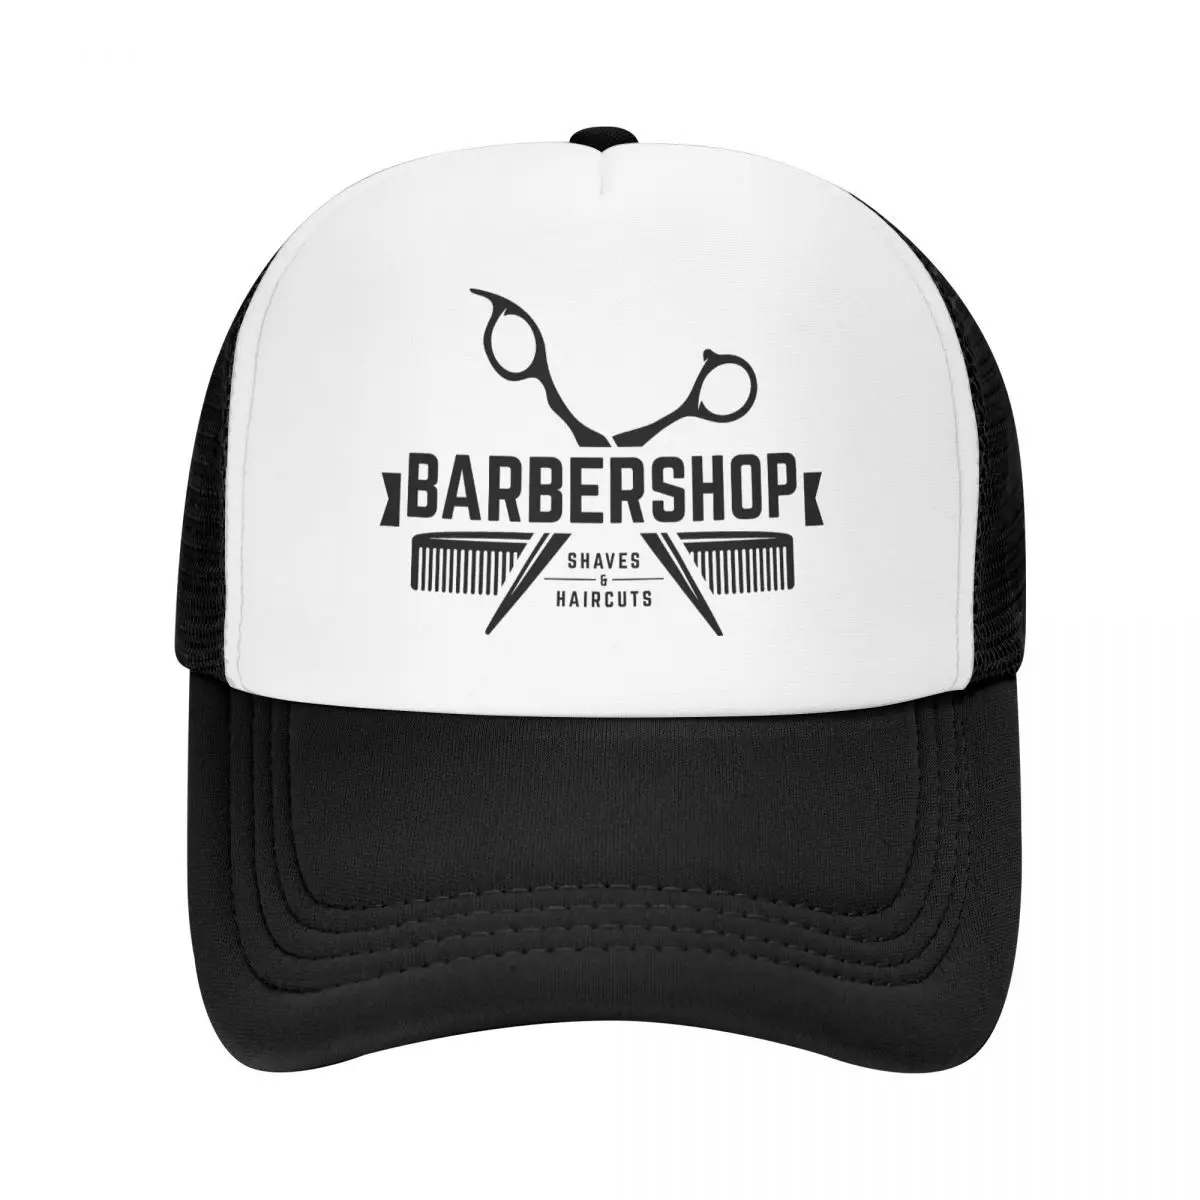 

Shaves Hair Cut Barbershop Baseball Cap Sports Women Men's Adjustable Hairdresser Barber Trucker Hat Summer Snapback Caps